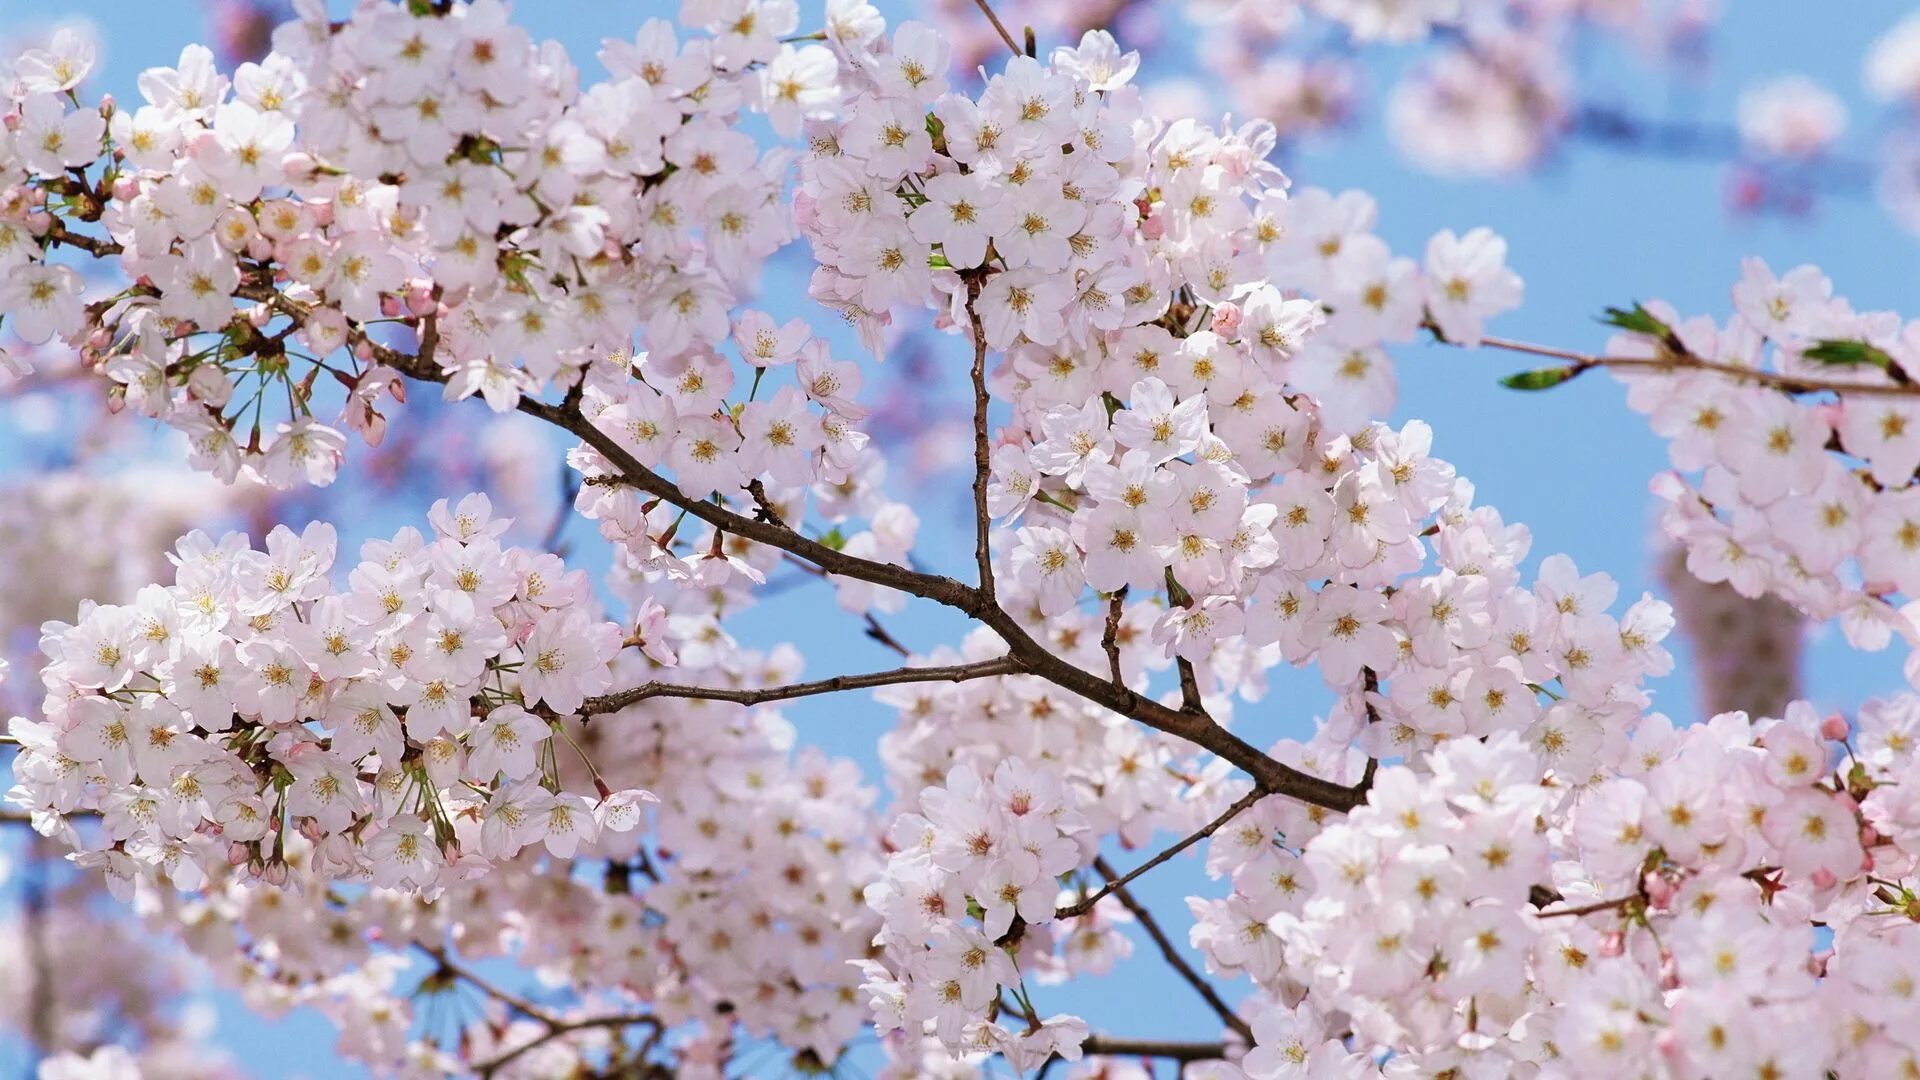 Обои на айфон март. Сакура гуллари. Цветущее дерево. Весеннее дерево. Цветущие деревья весной.